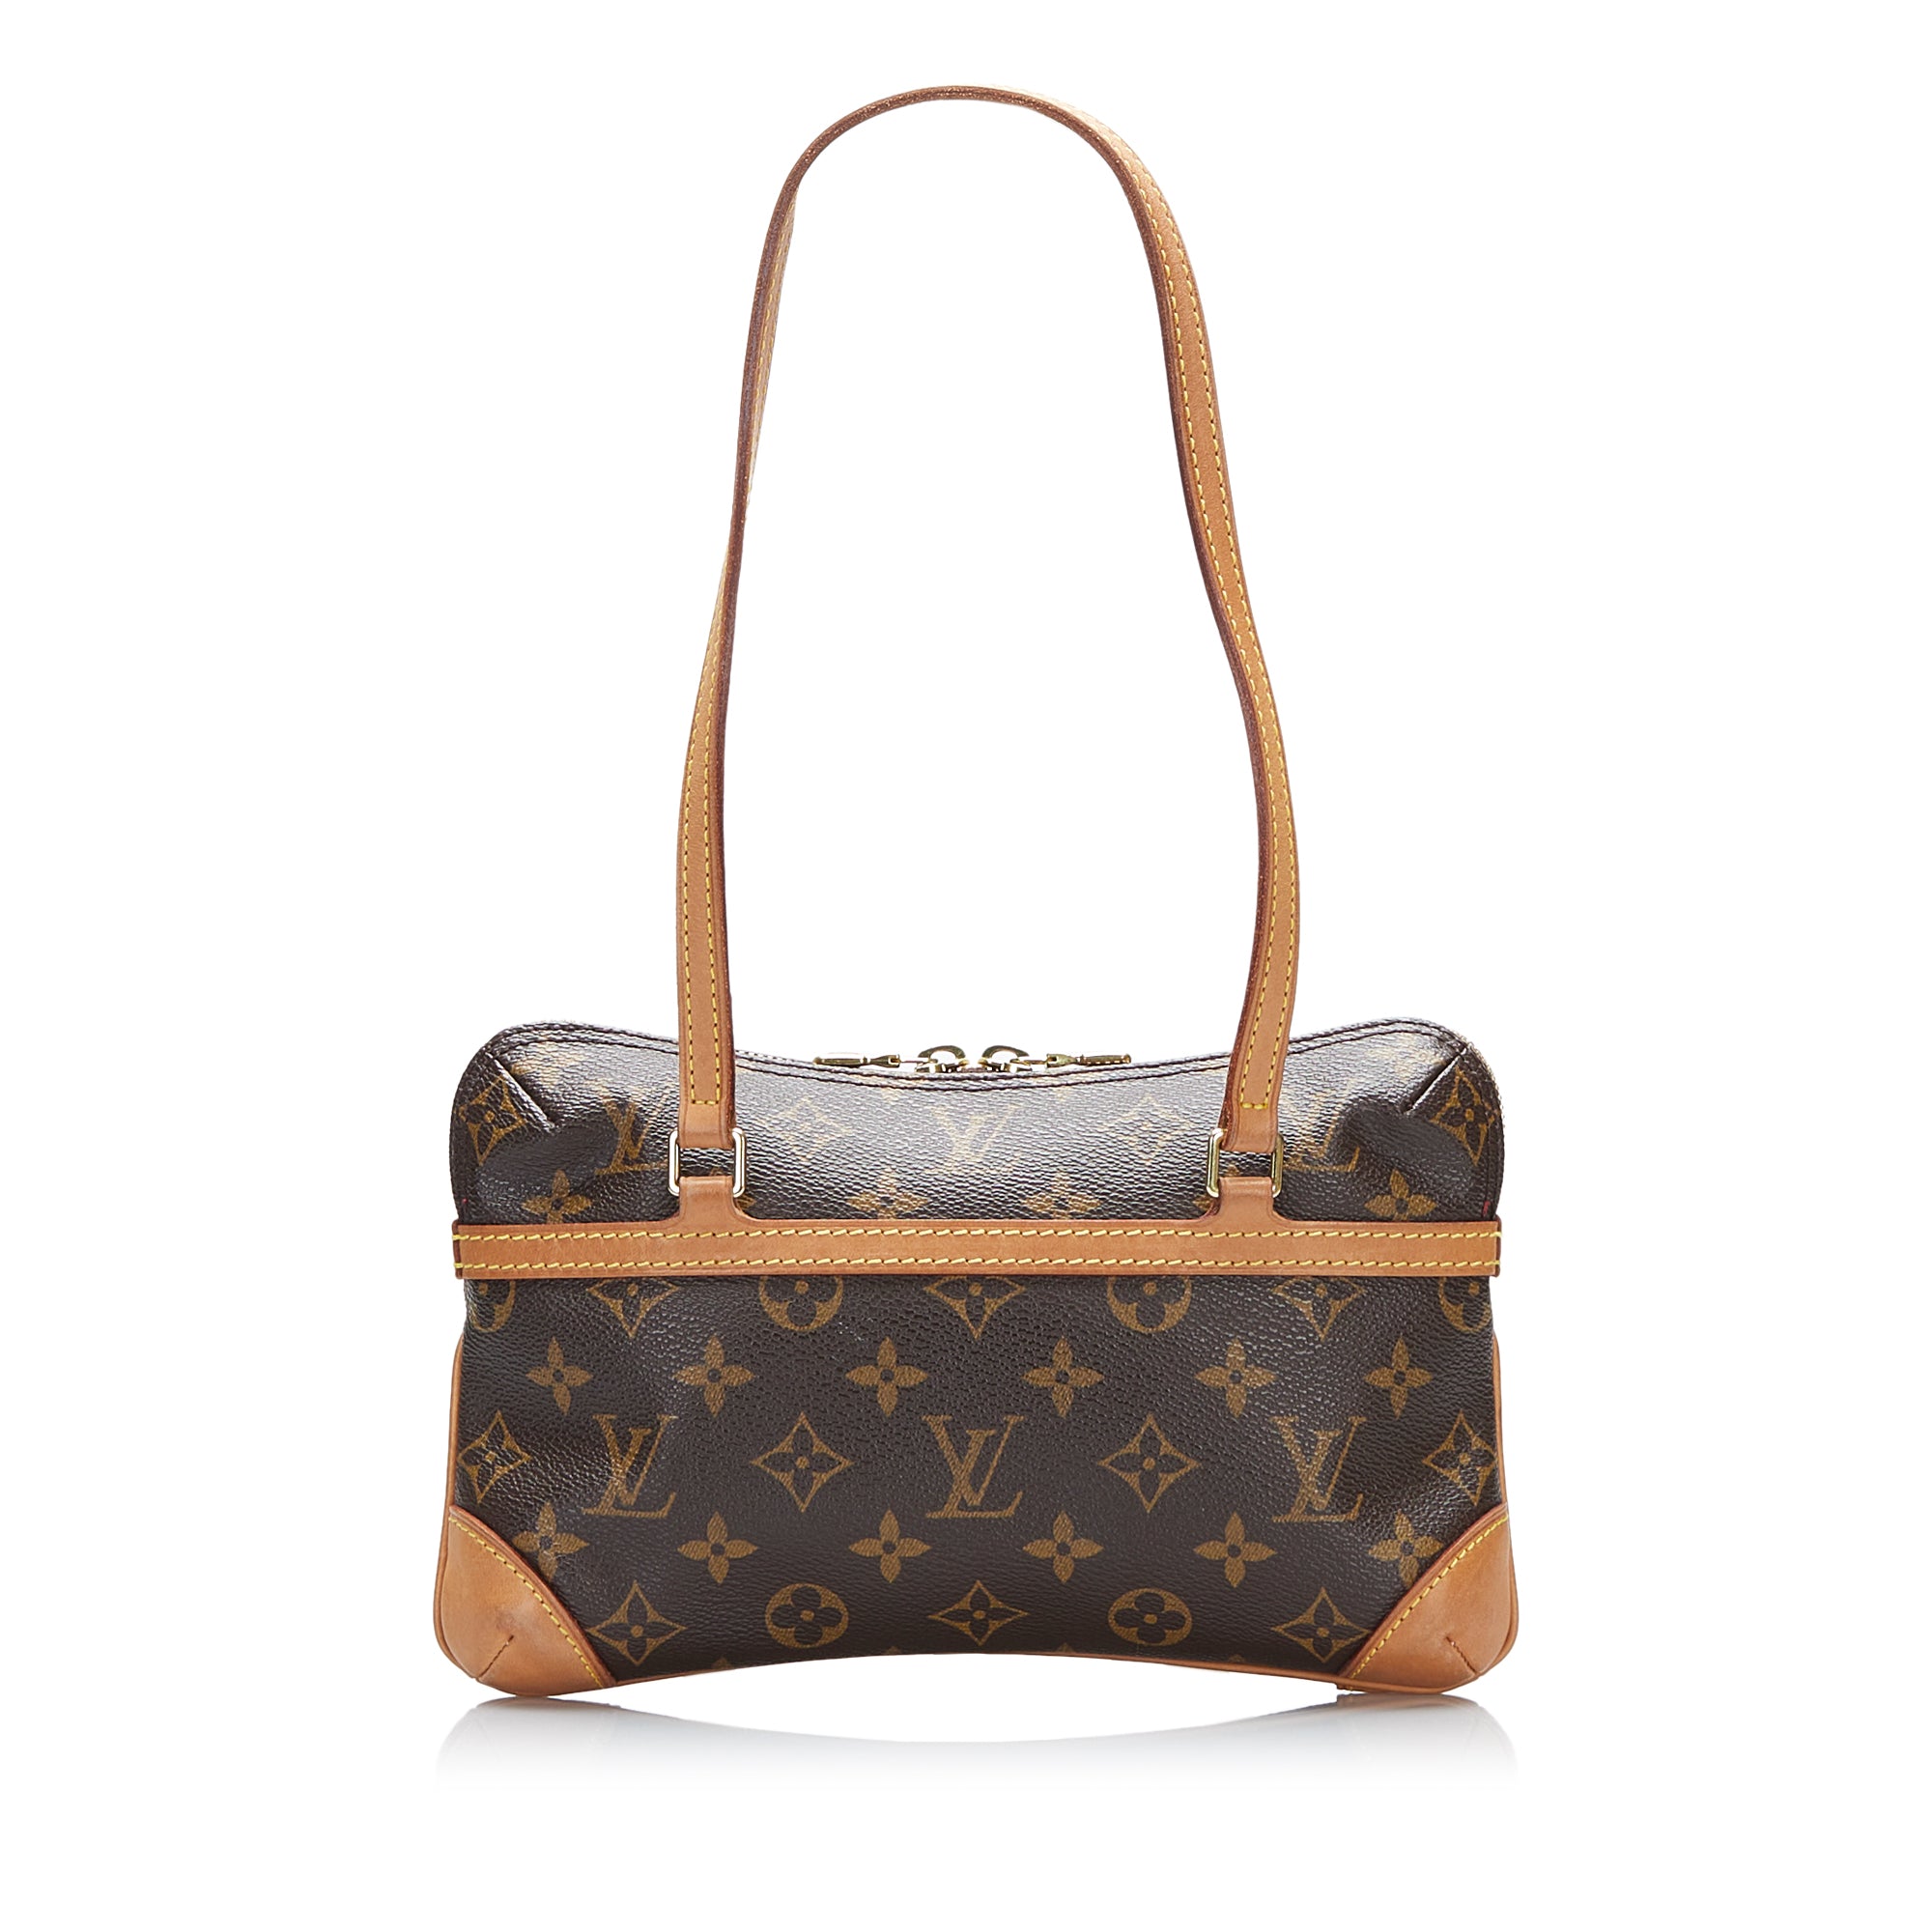 Louis Vuitton Mezzo Brown Canvas Tote Bag (Pre-Owned)